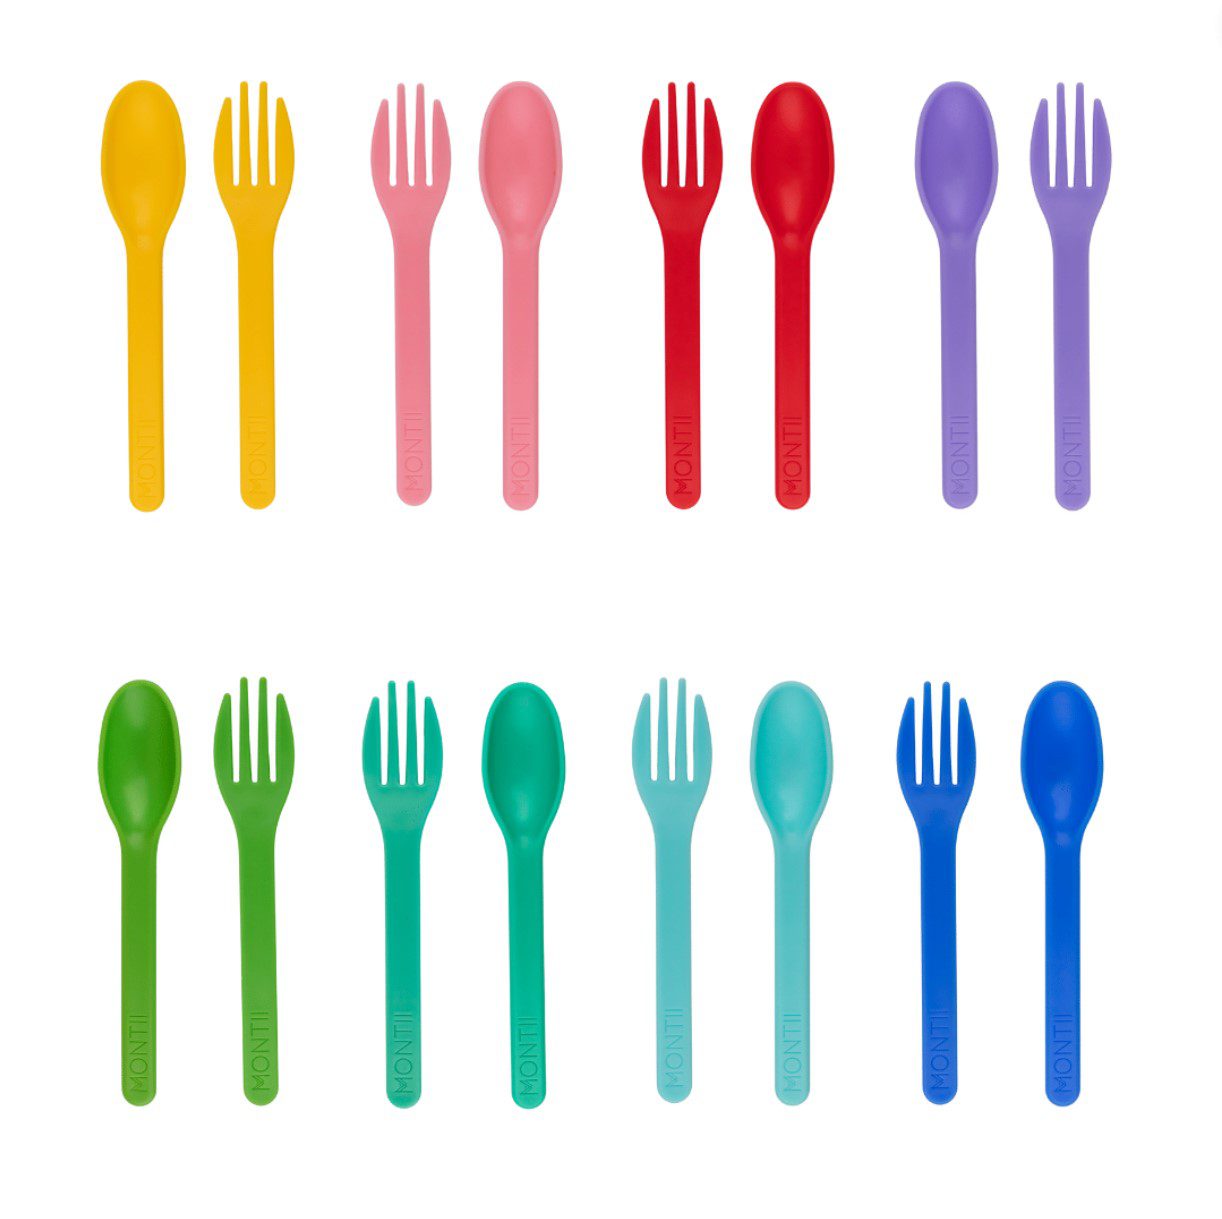 Forks & Spoons